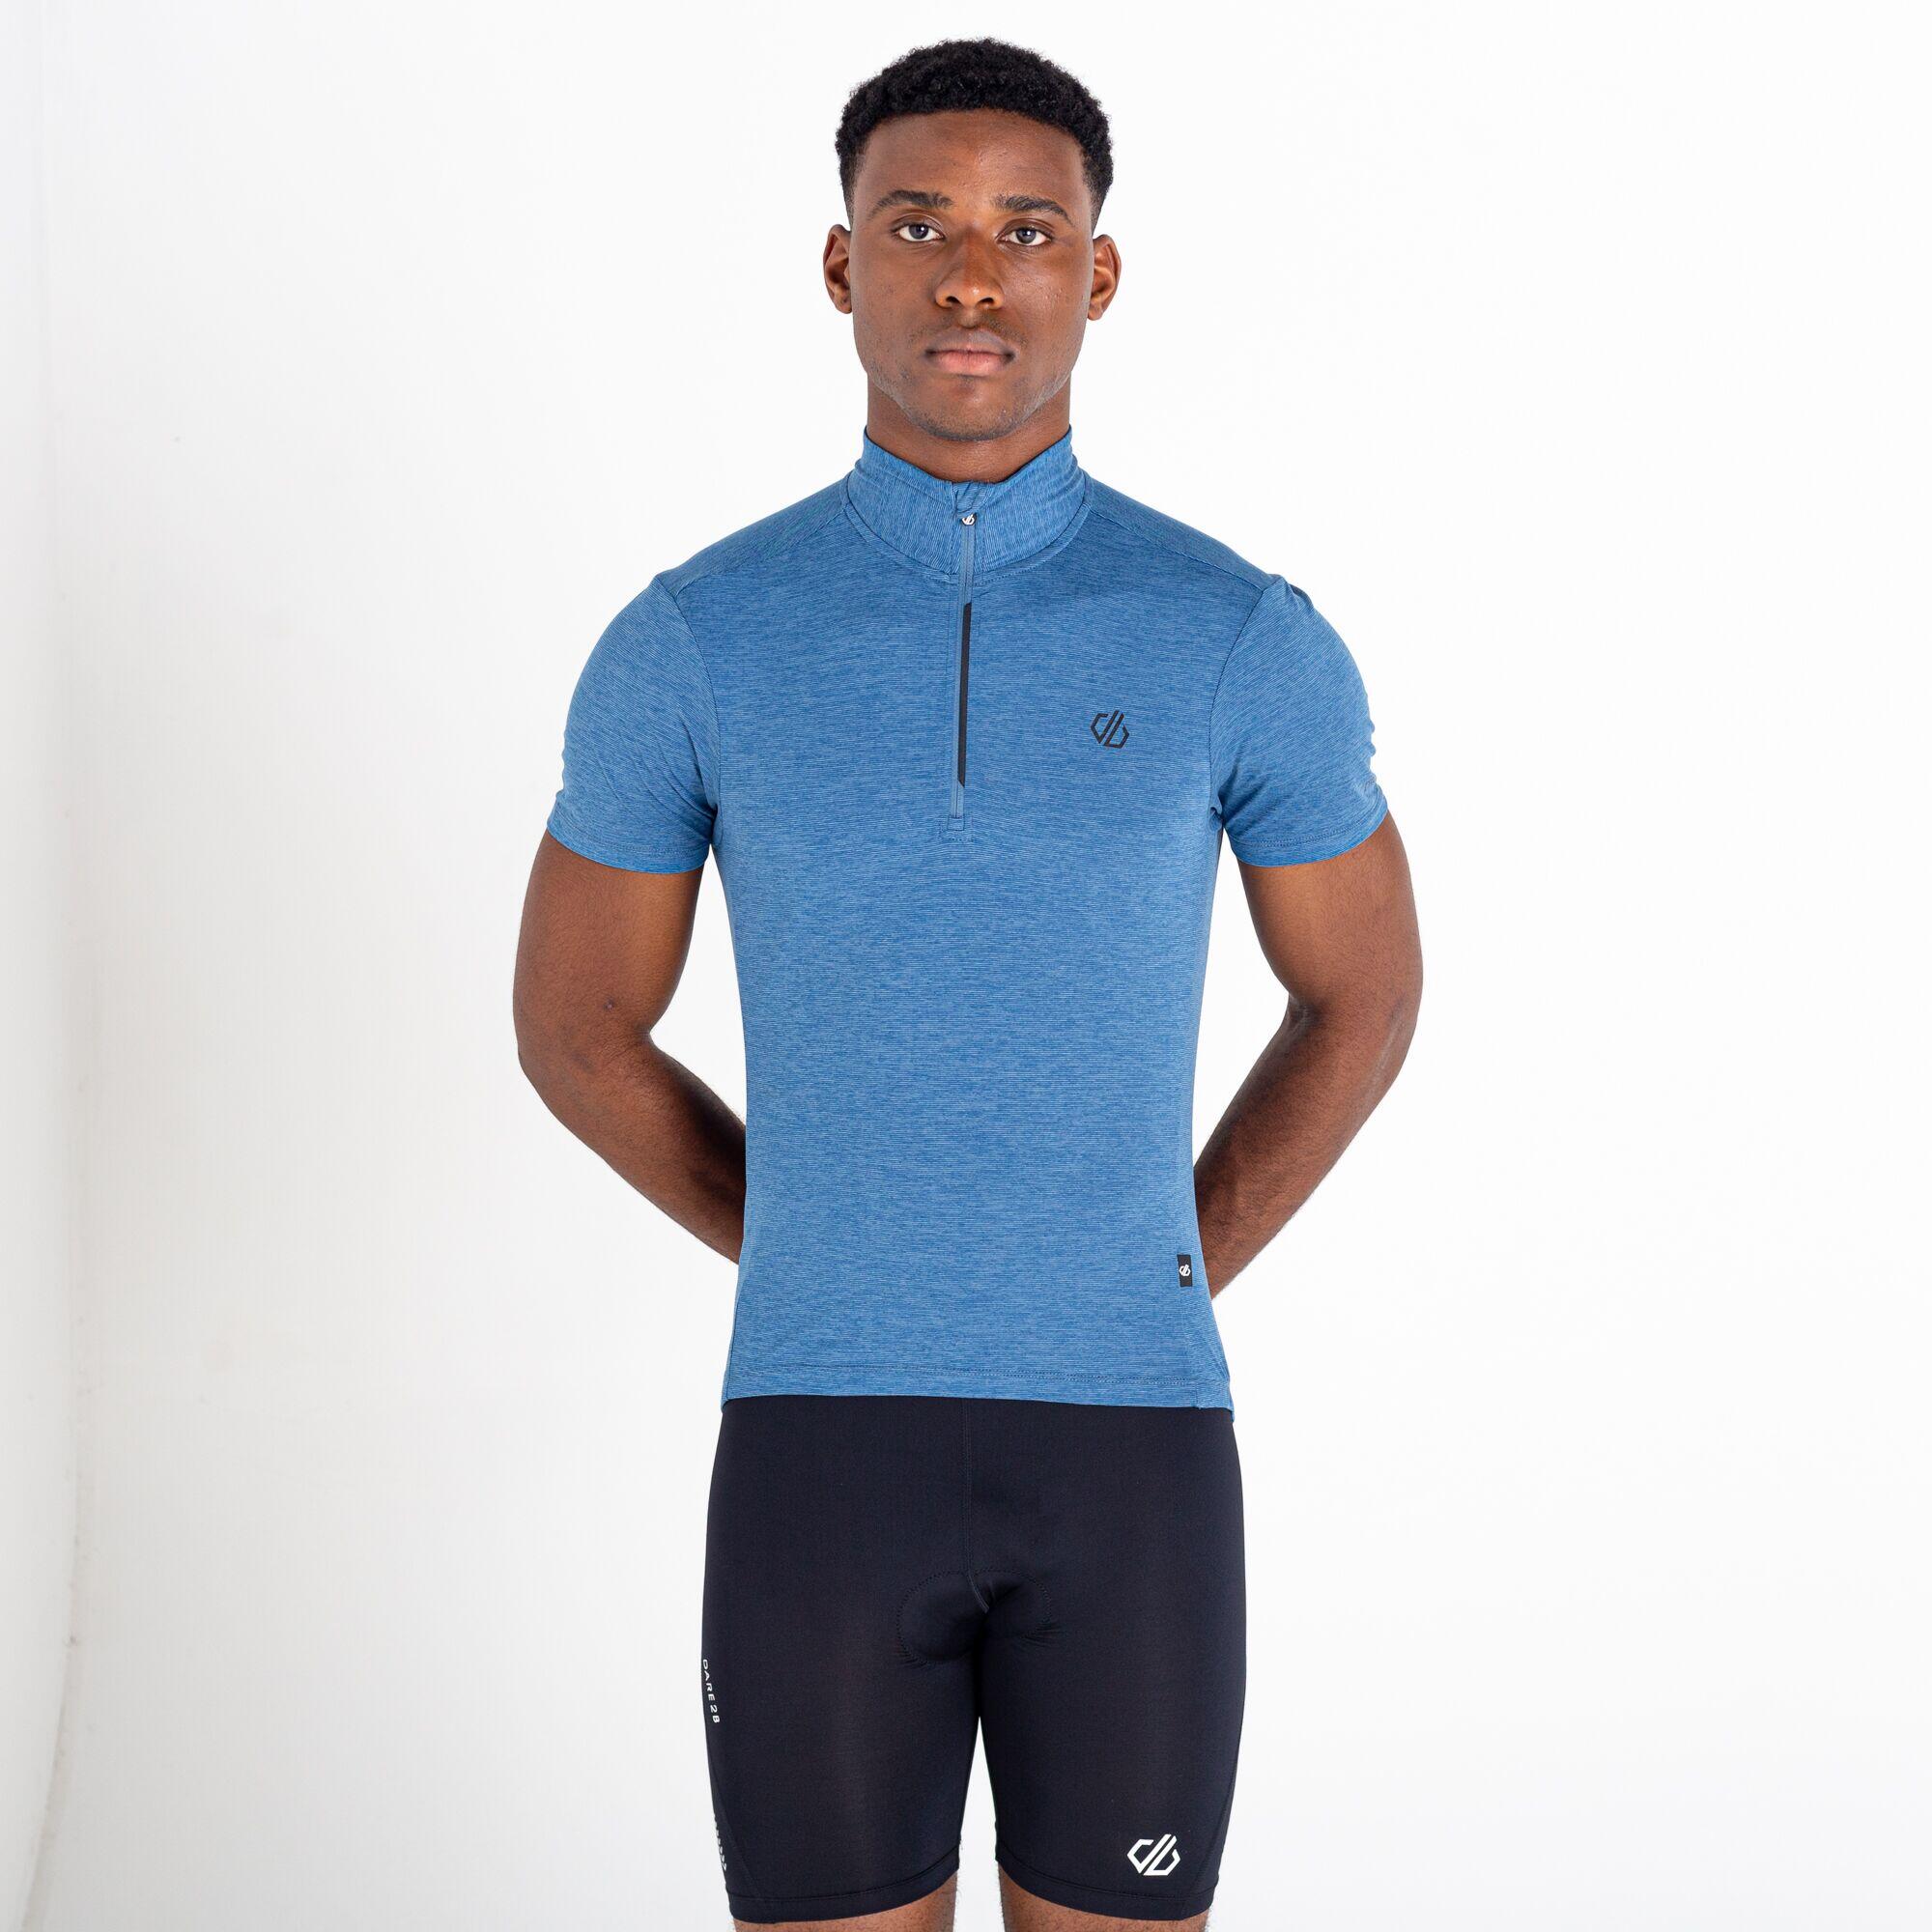 Pedal It Out Men's Cycling 1/2 Zip Short Sleeve T-Shirt - Stellar Blue Marl 4/7